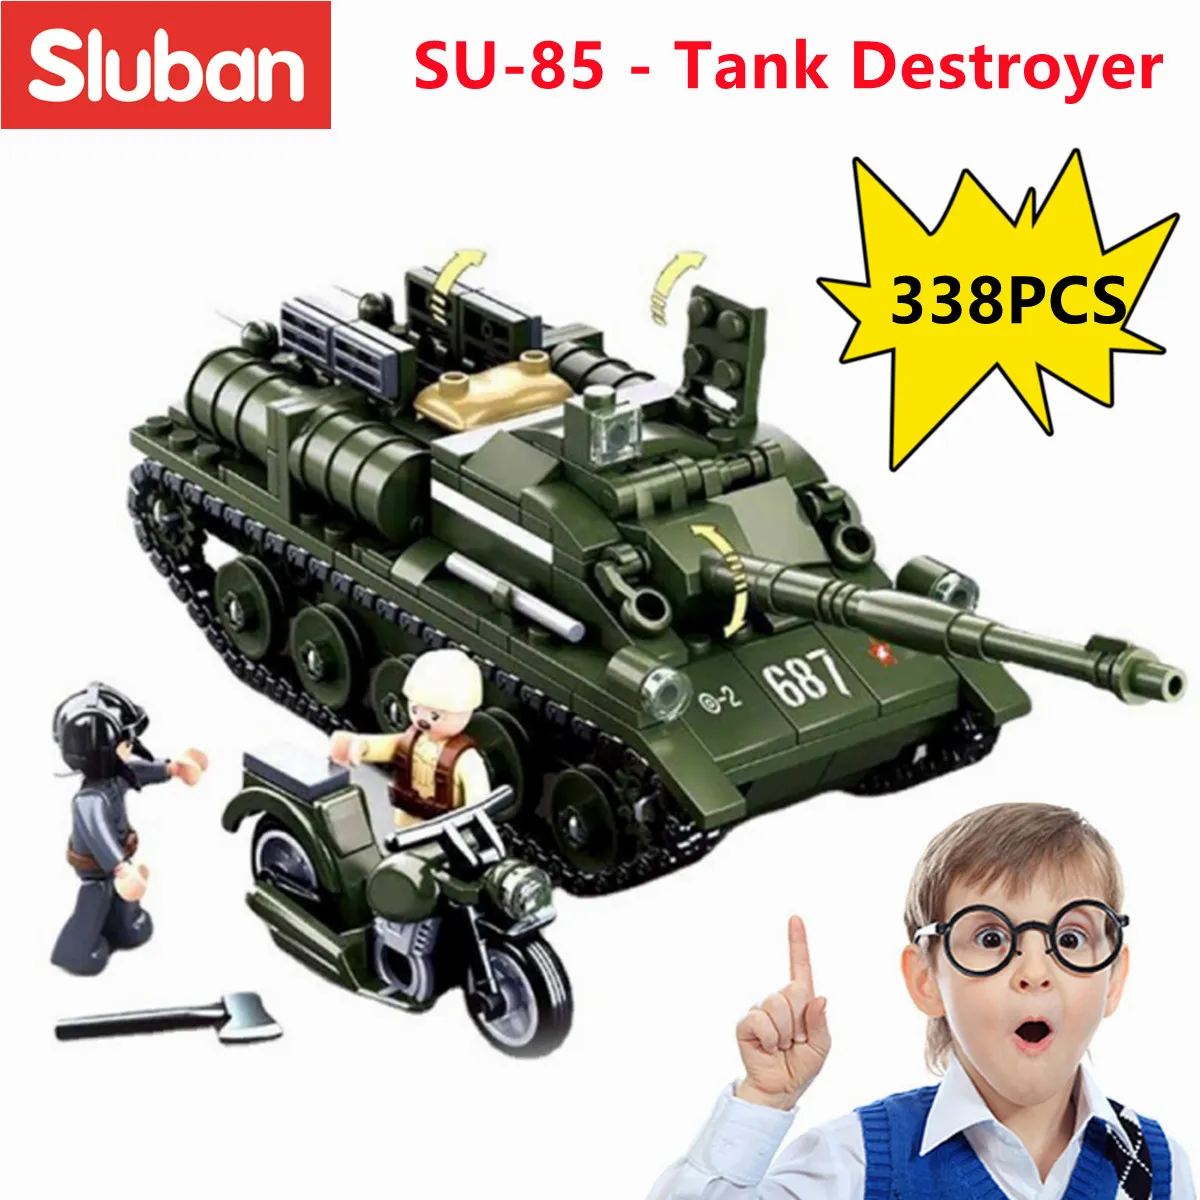 Sluban Building Block Toys WW2 Army SU85 Tank Destroyer 338PCS Bricks B0687  Military Construction Compatbile With Leading Brands - LEPIN LEPIN Store